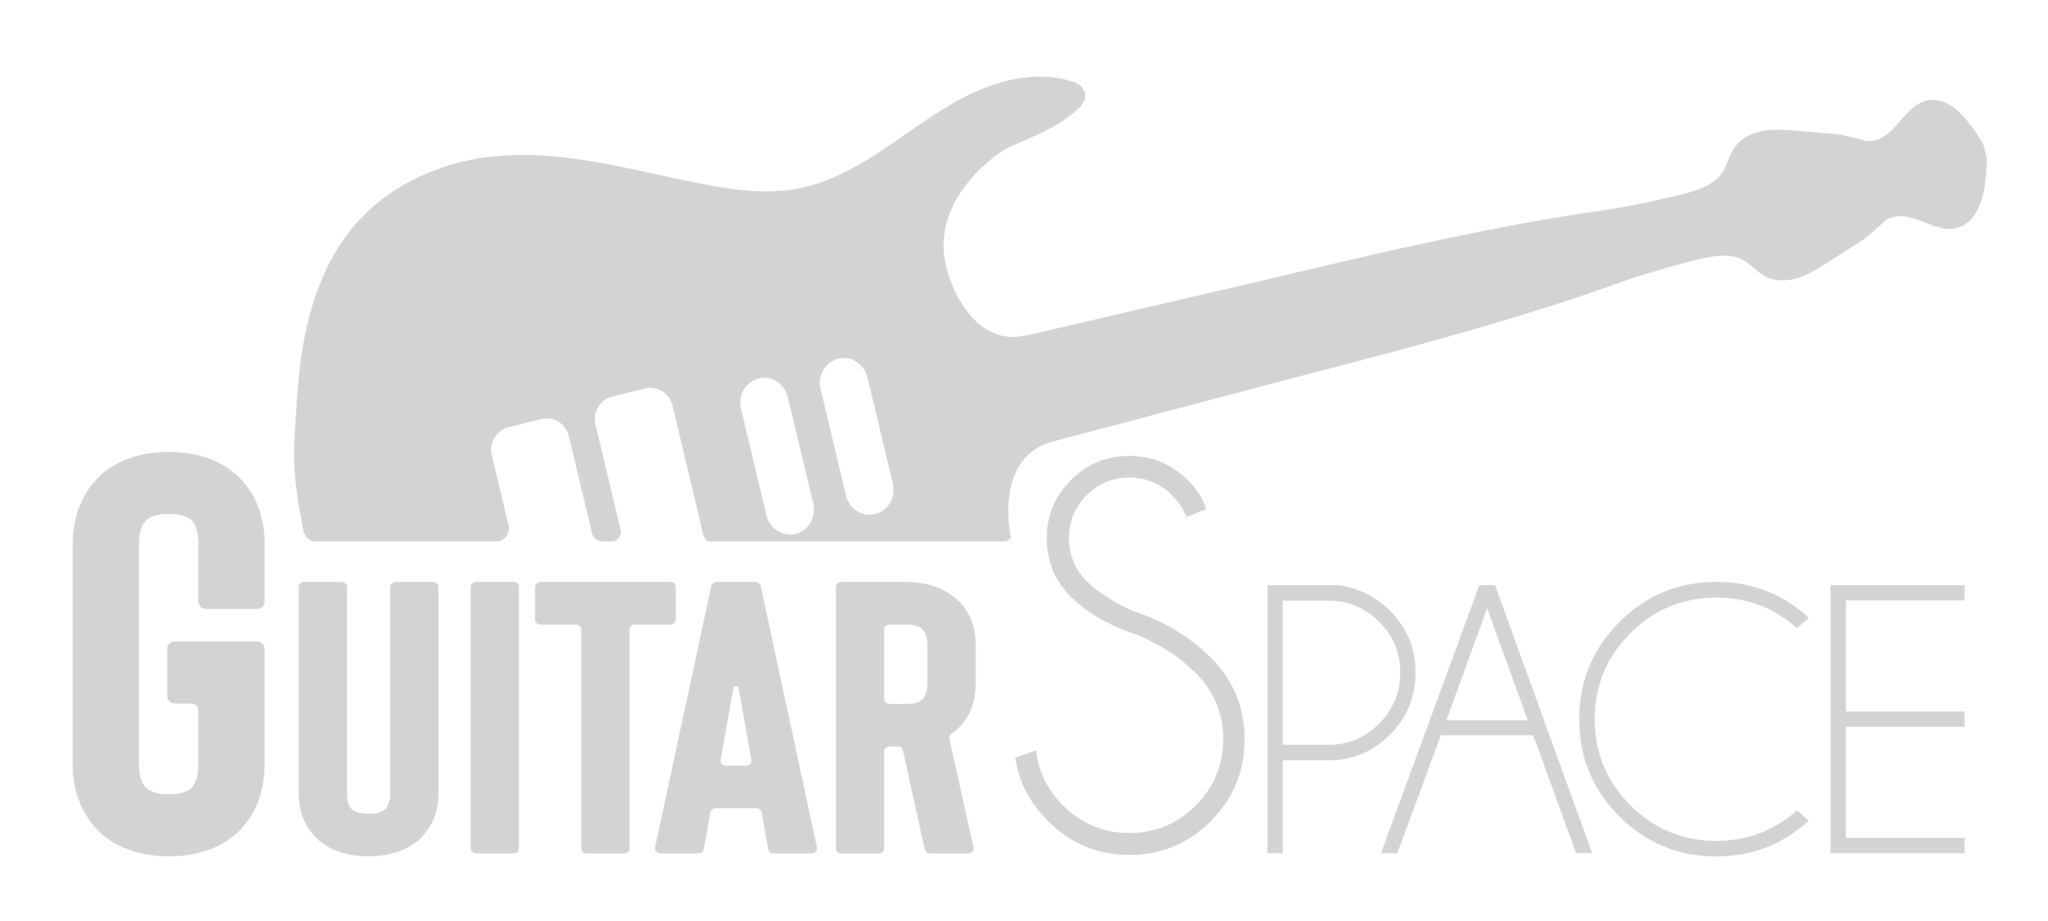 Guitar Space